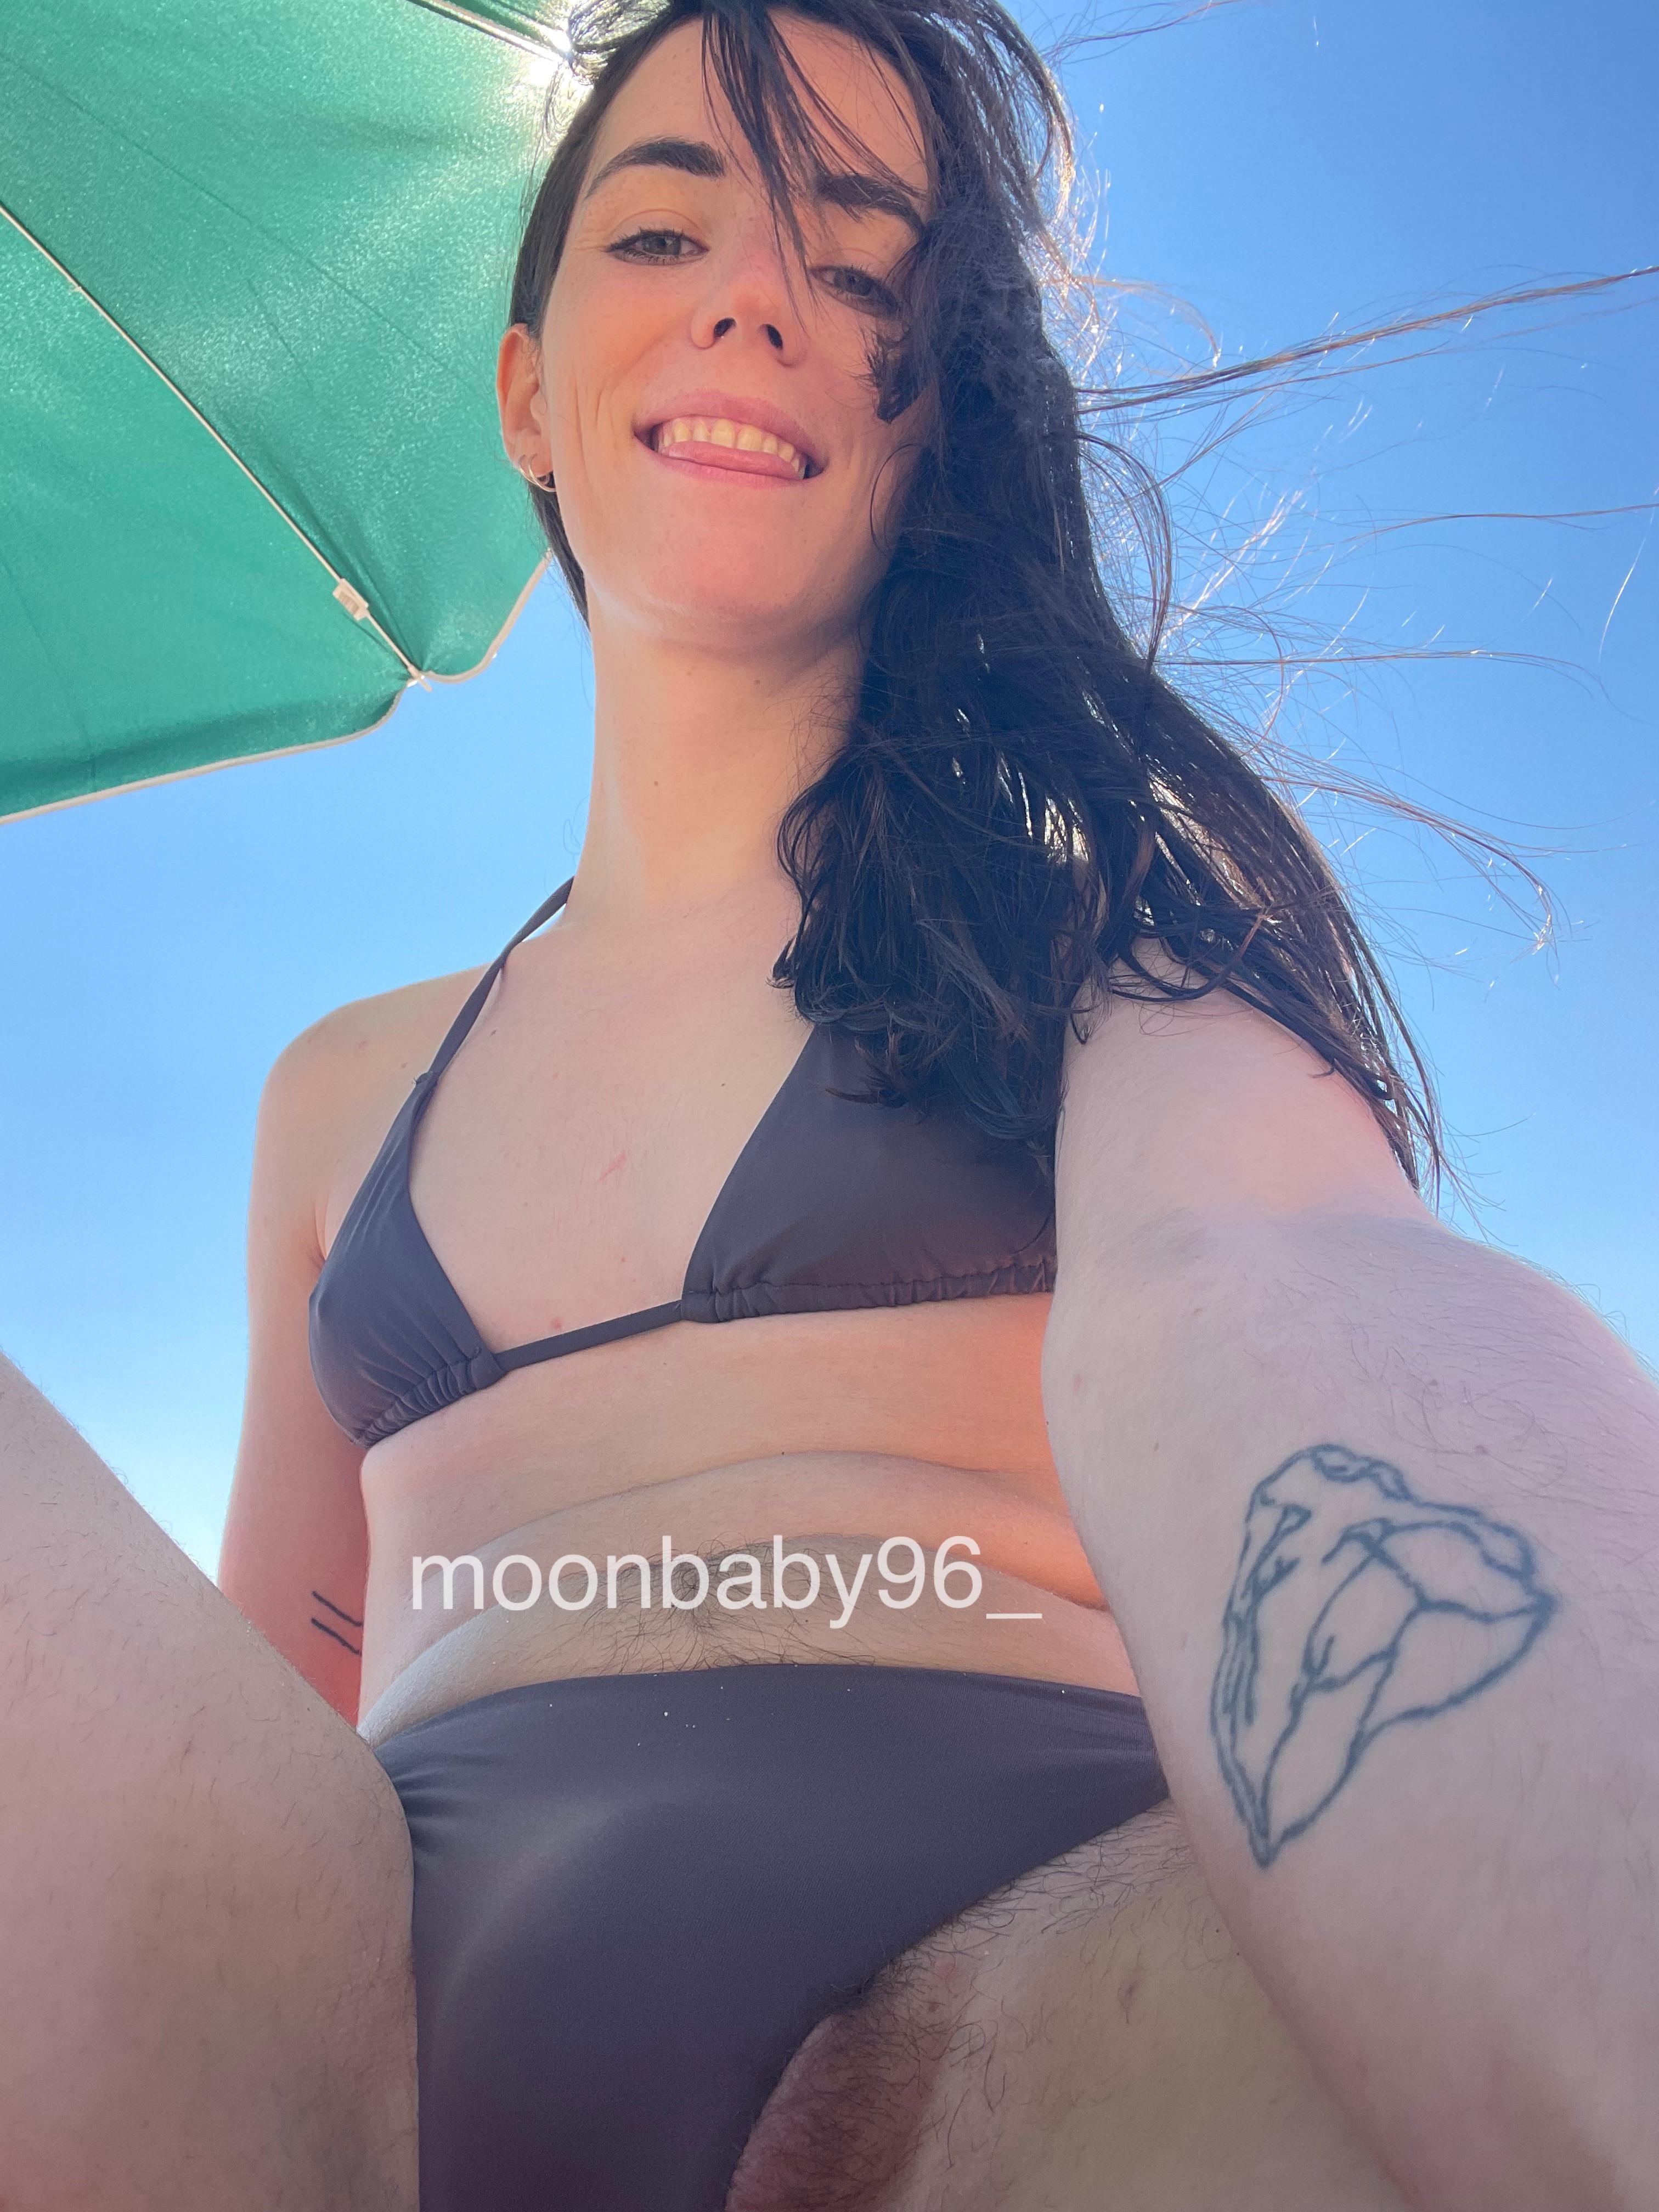 Beach Voyeur Pussy Bulge - Would you enjoy this bulge on the beach?